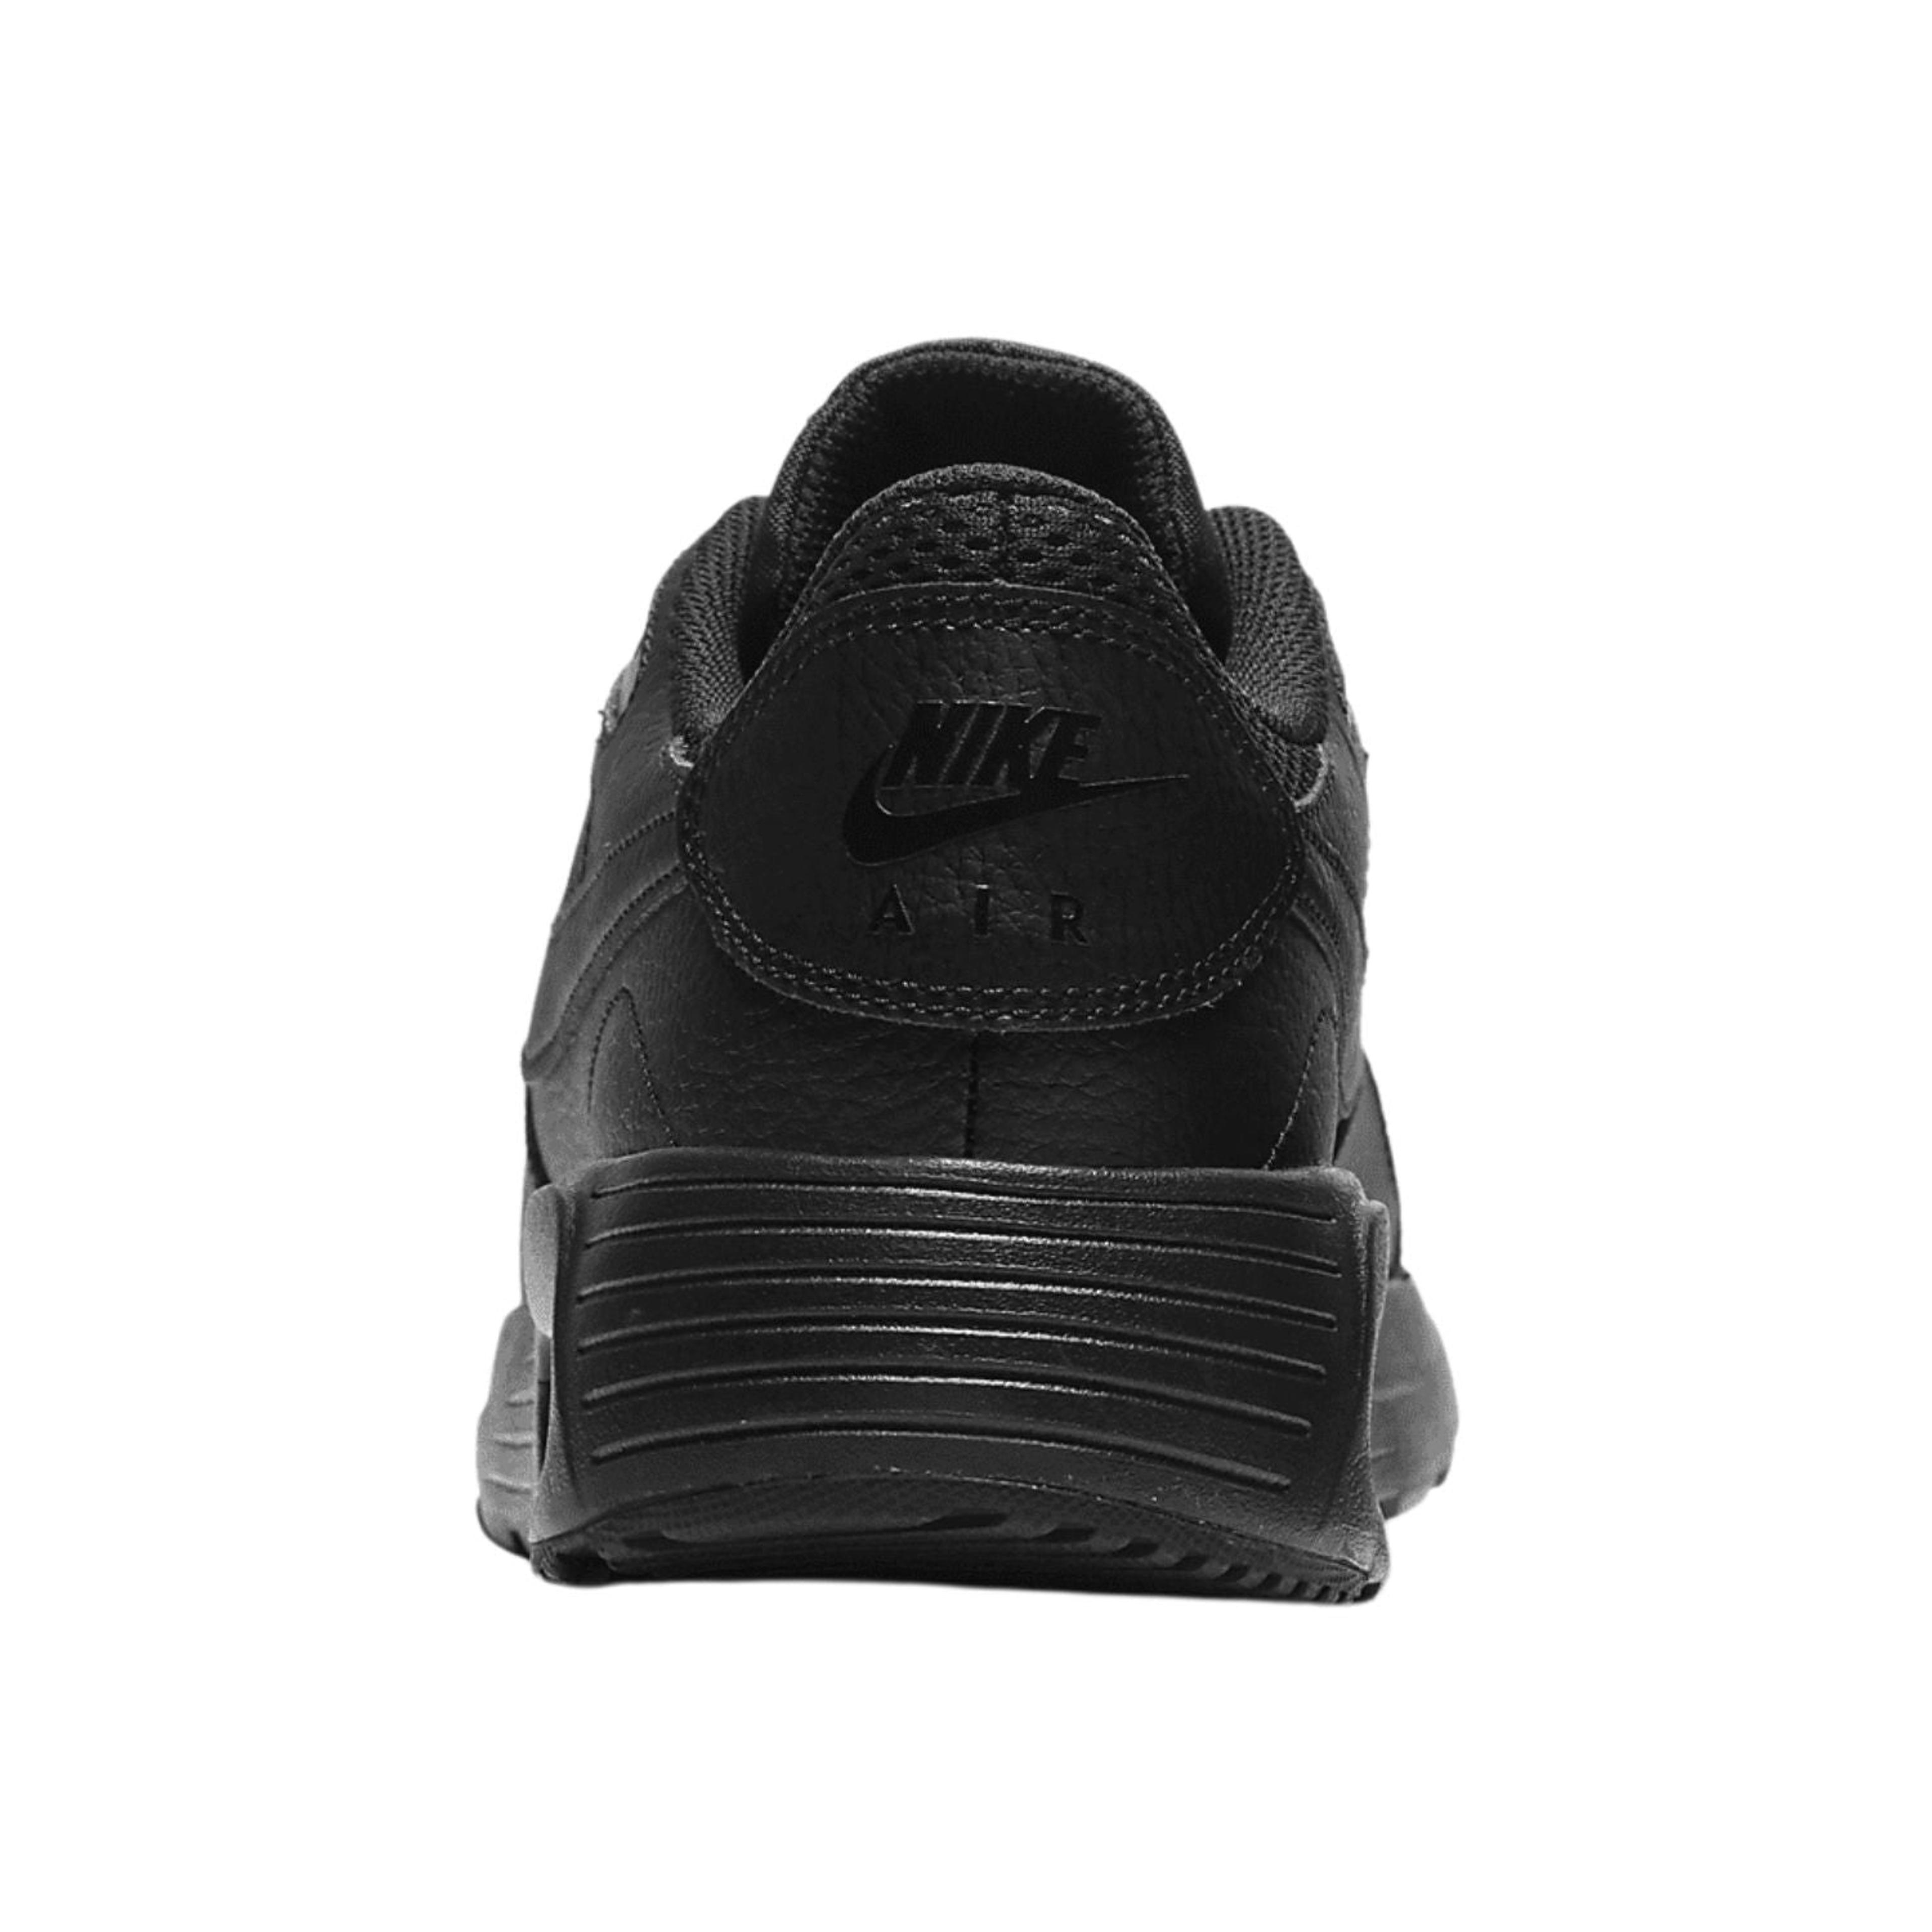 Alternate View 1 of Nike Air Max SC Triple Black